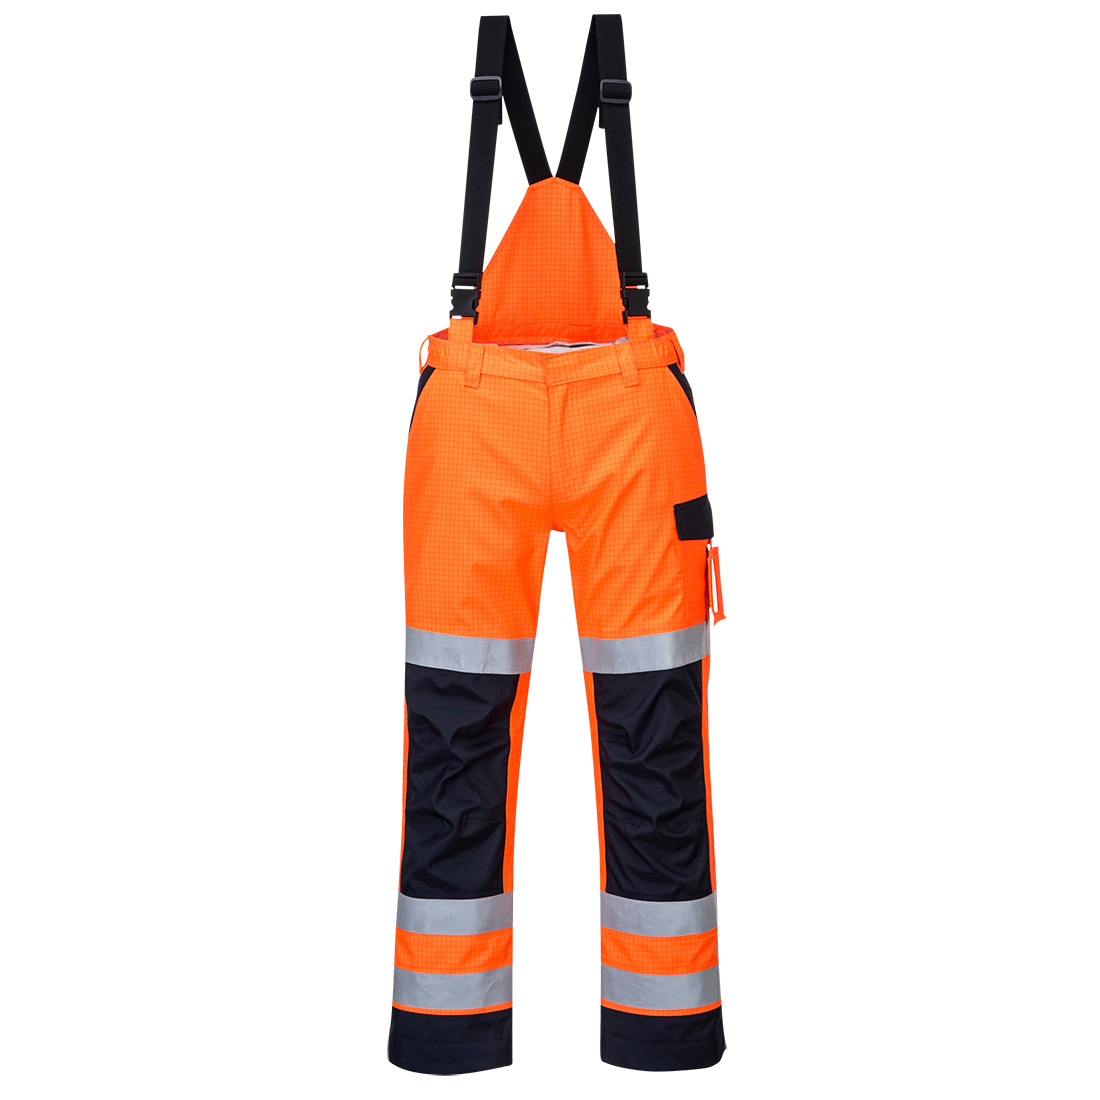 Modaflame Rain Multi Norm Arc Trouser - Orange/Navy